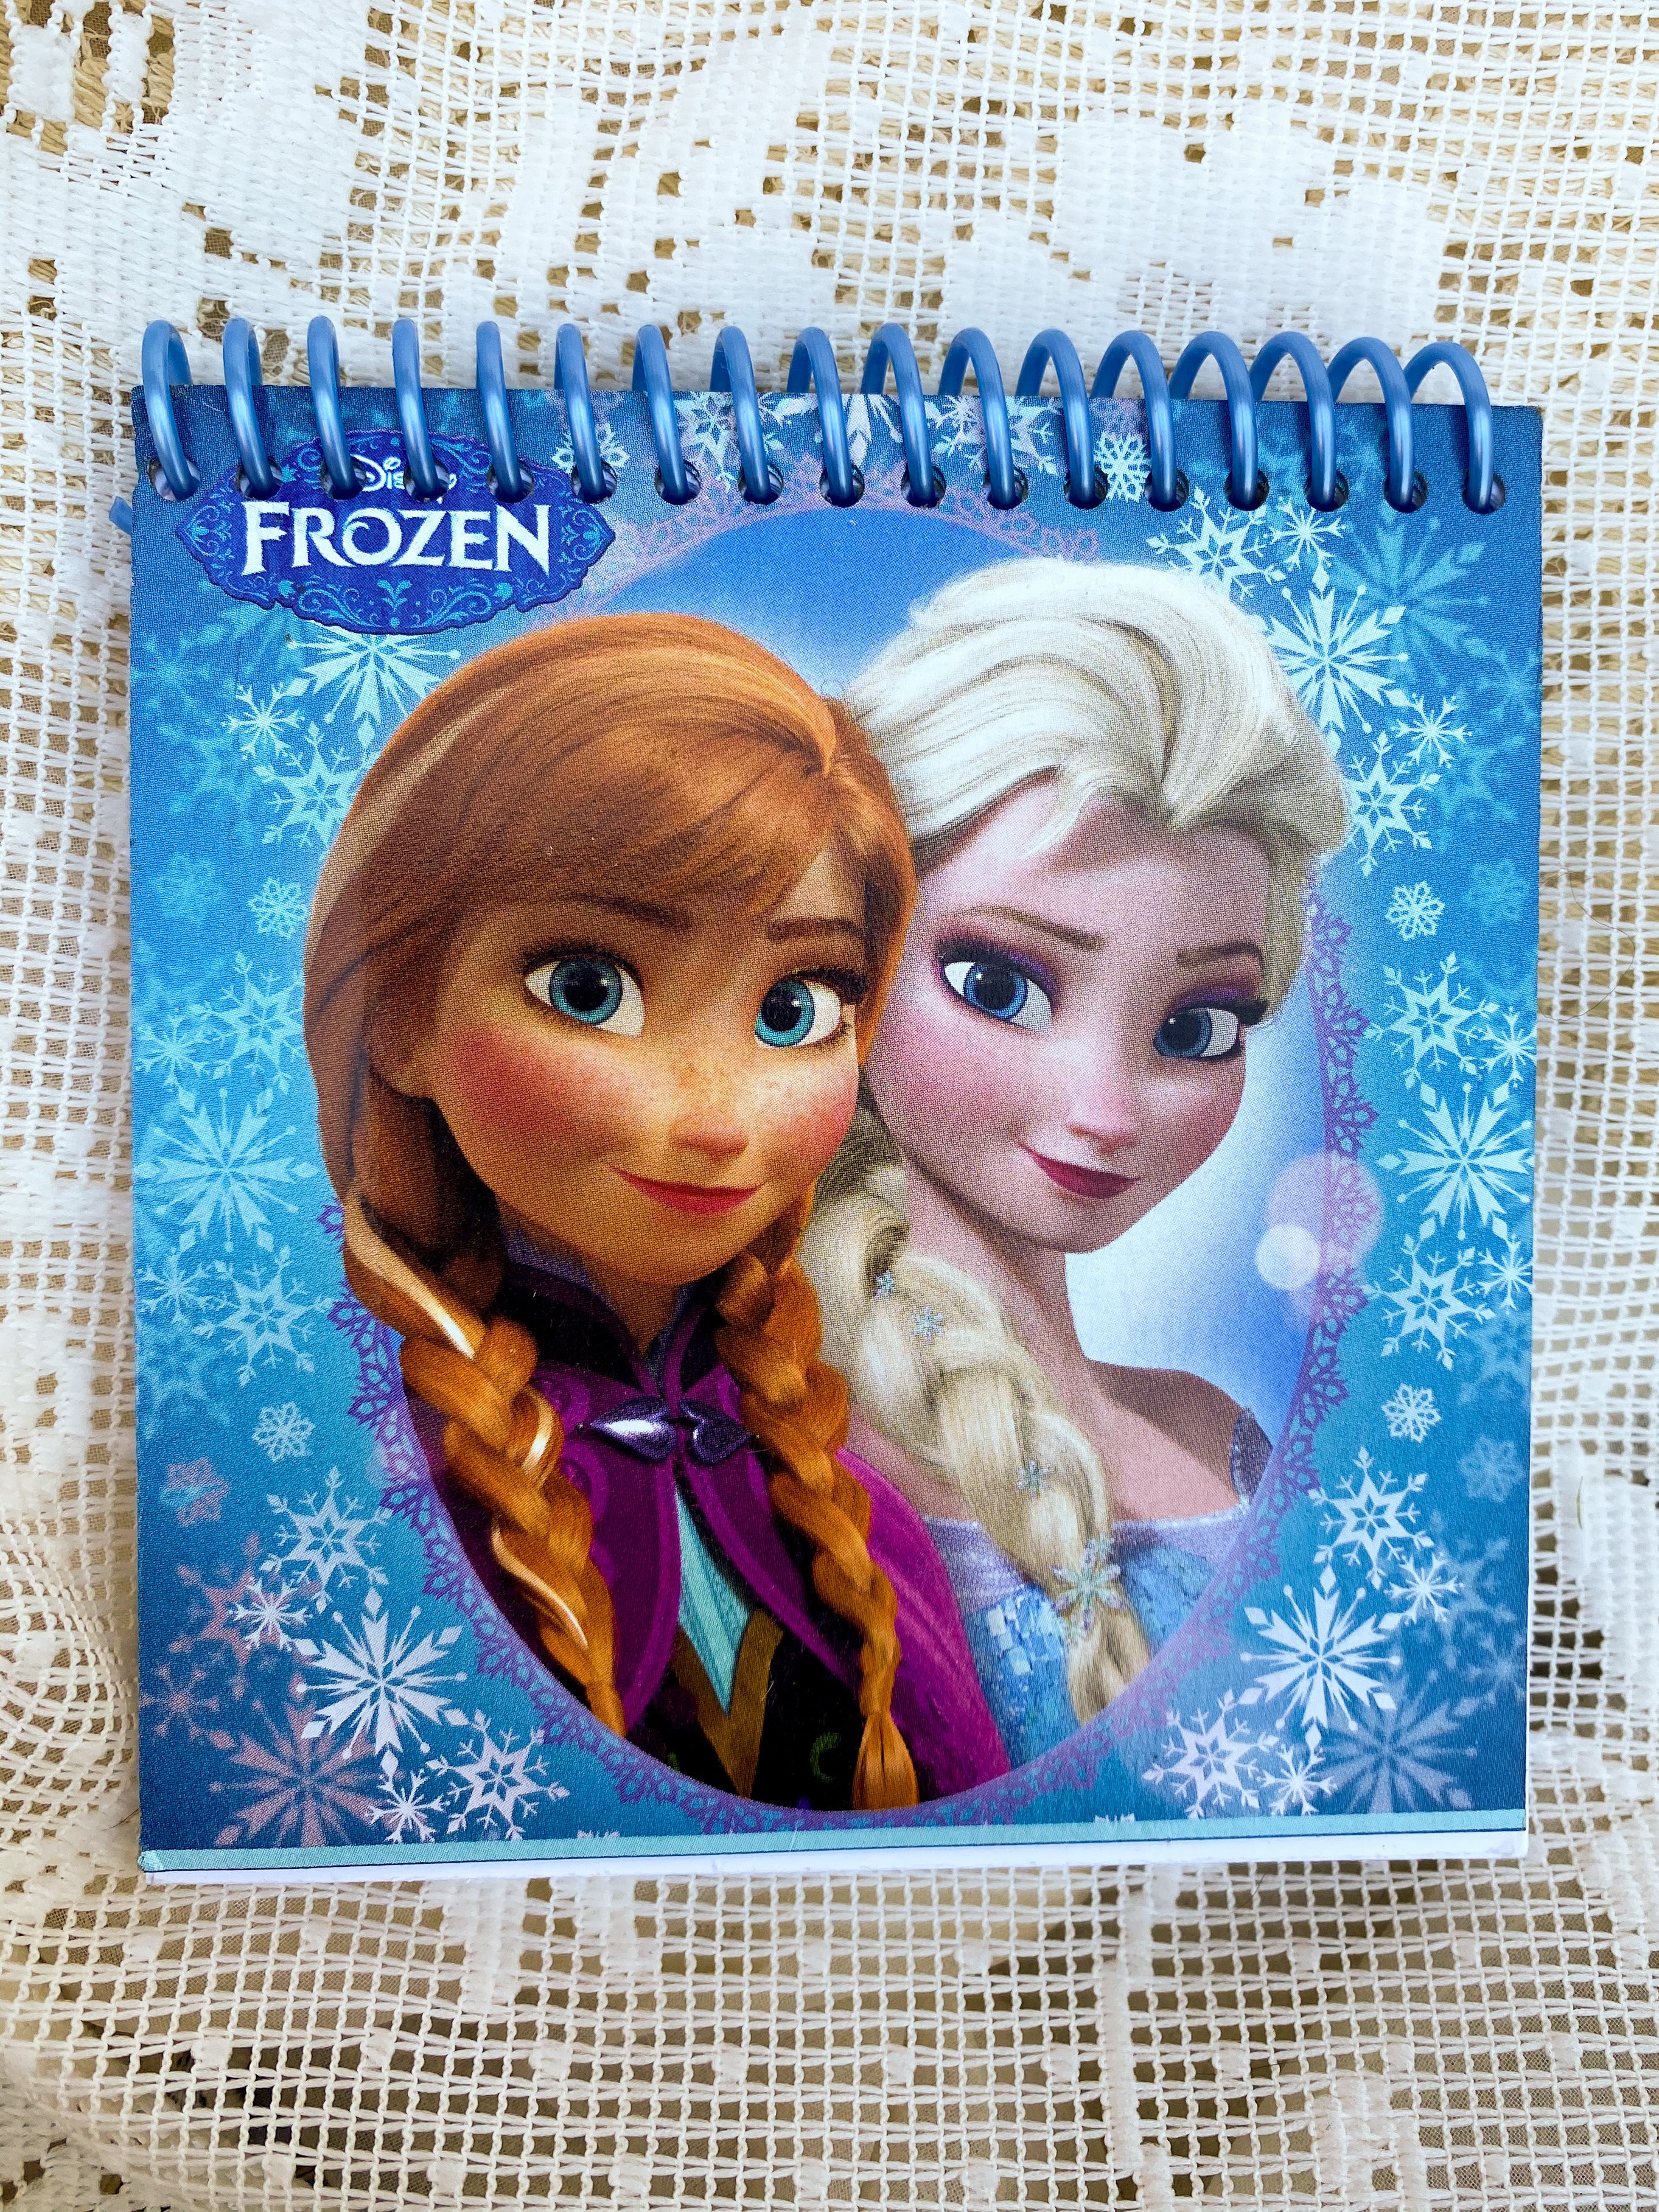 Frozen Recycled Kleenex Box Notebook